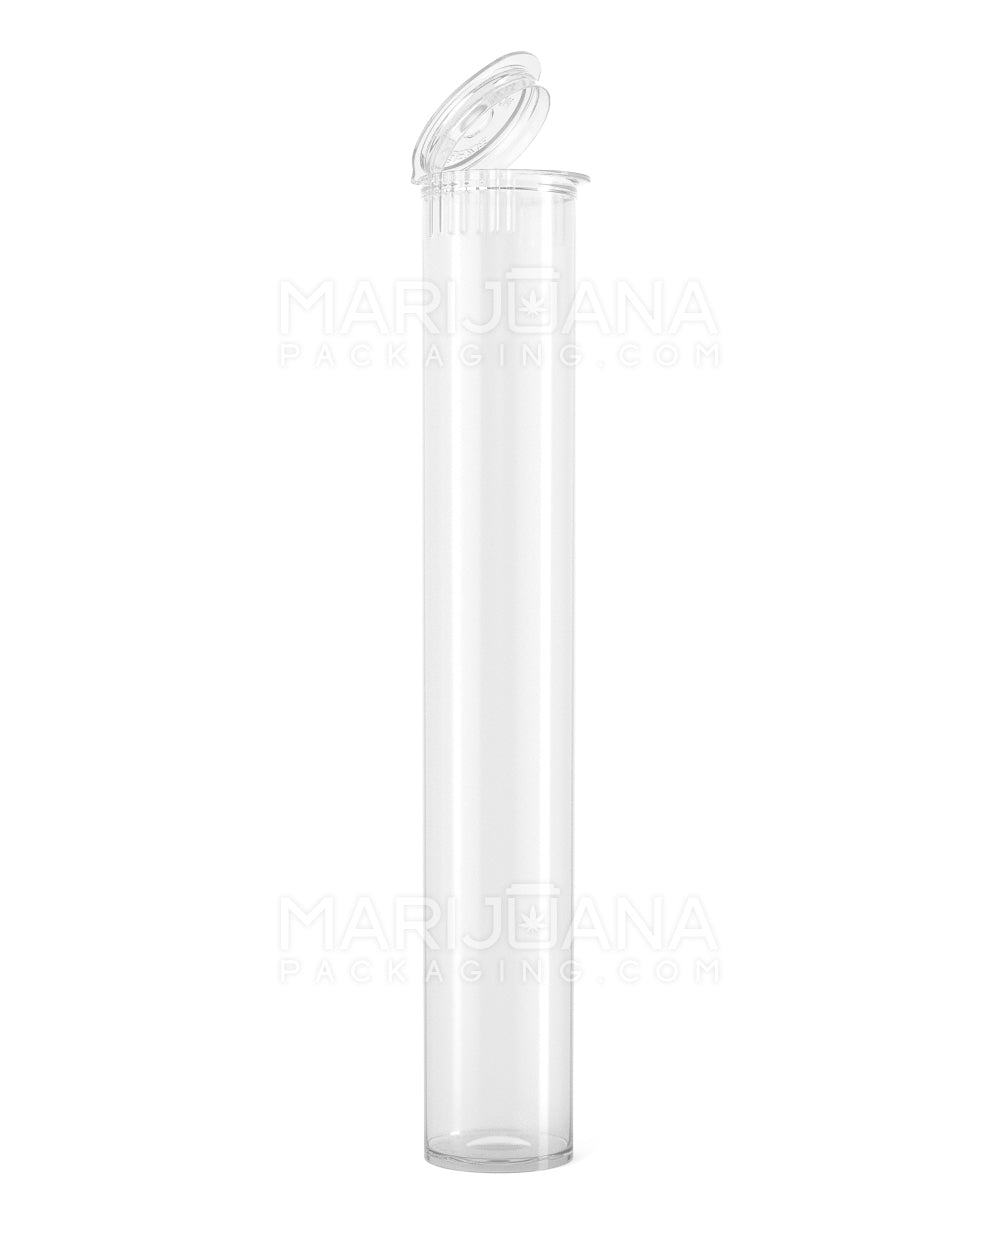 POLLEN GEAR | Child Resistant Pop Top Plastic Snap Cap Pre-Roll Tubes | 116mm - Clear - 1008 Count - 1